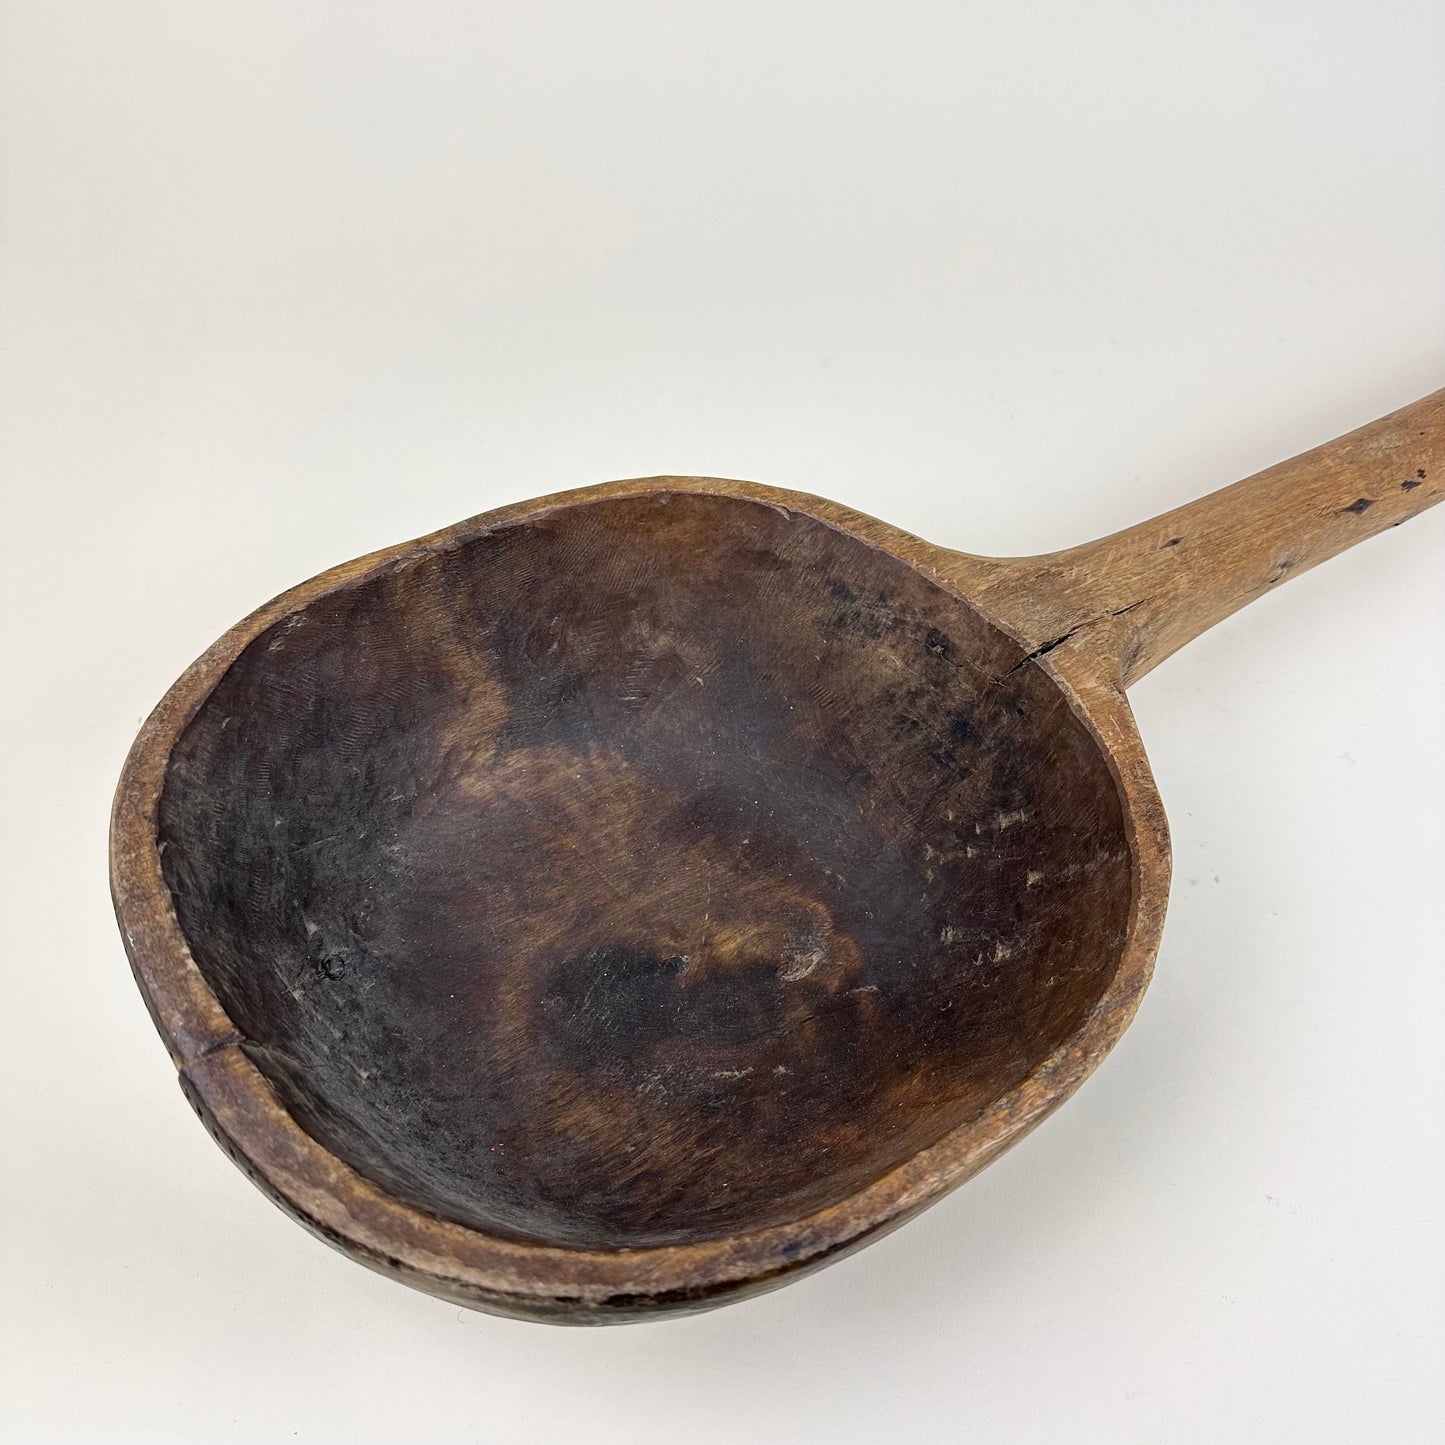 Extra large wooden ladle, vintage